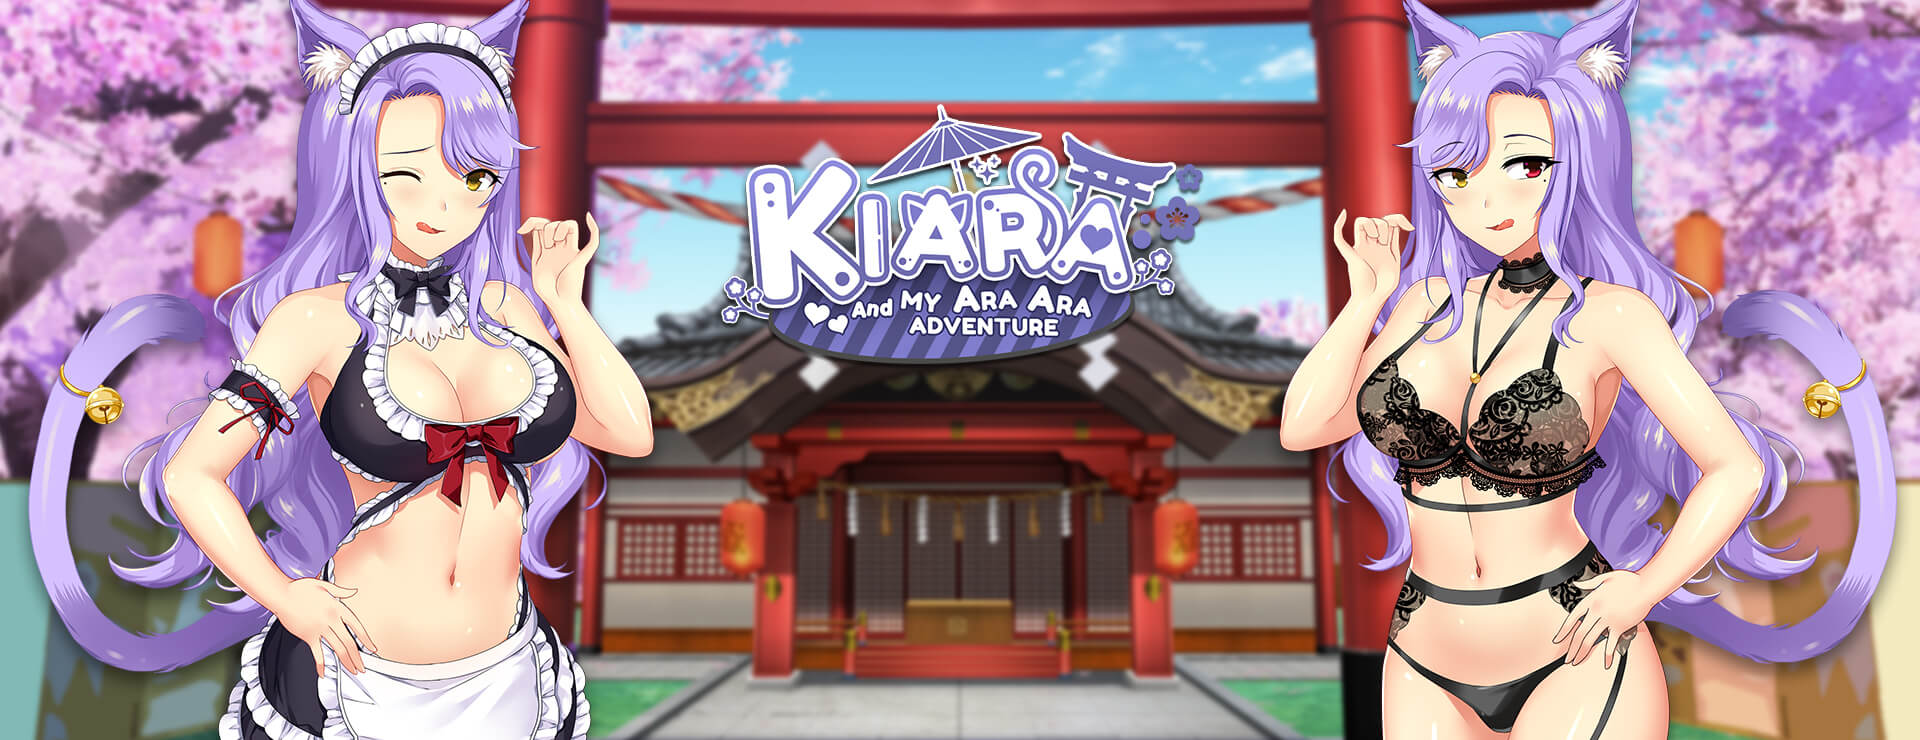 Kiara and my Ara Ara Adventure - 虚拟小说 遊戲